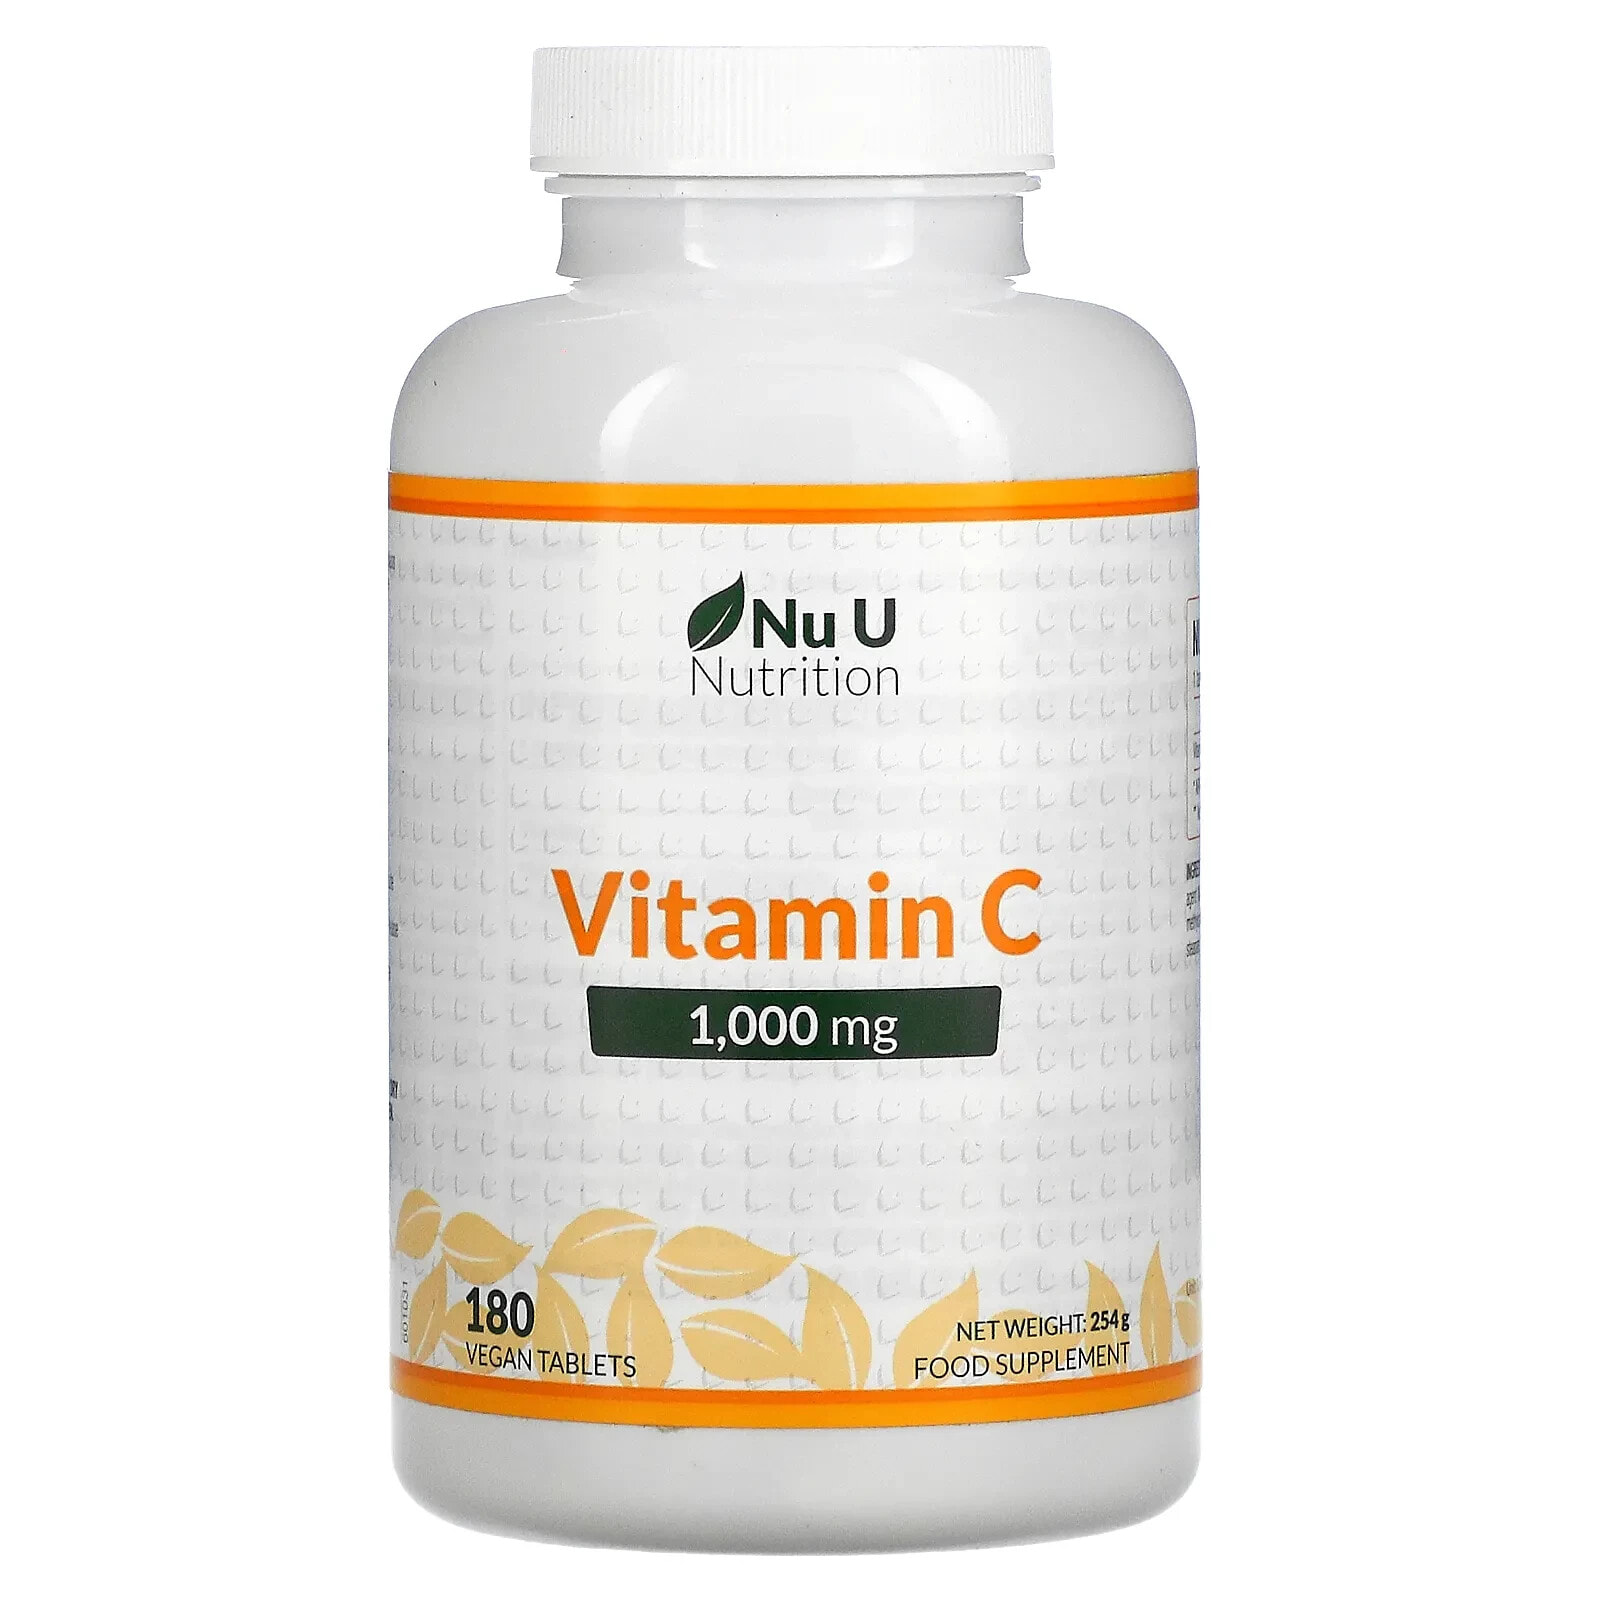 Vitamin C, 1,000 mg, 180 Vegan Tablets